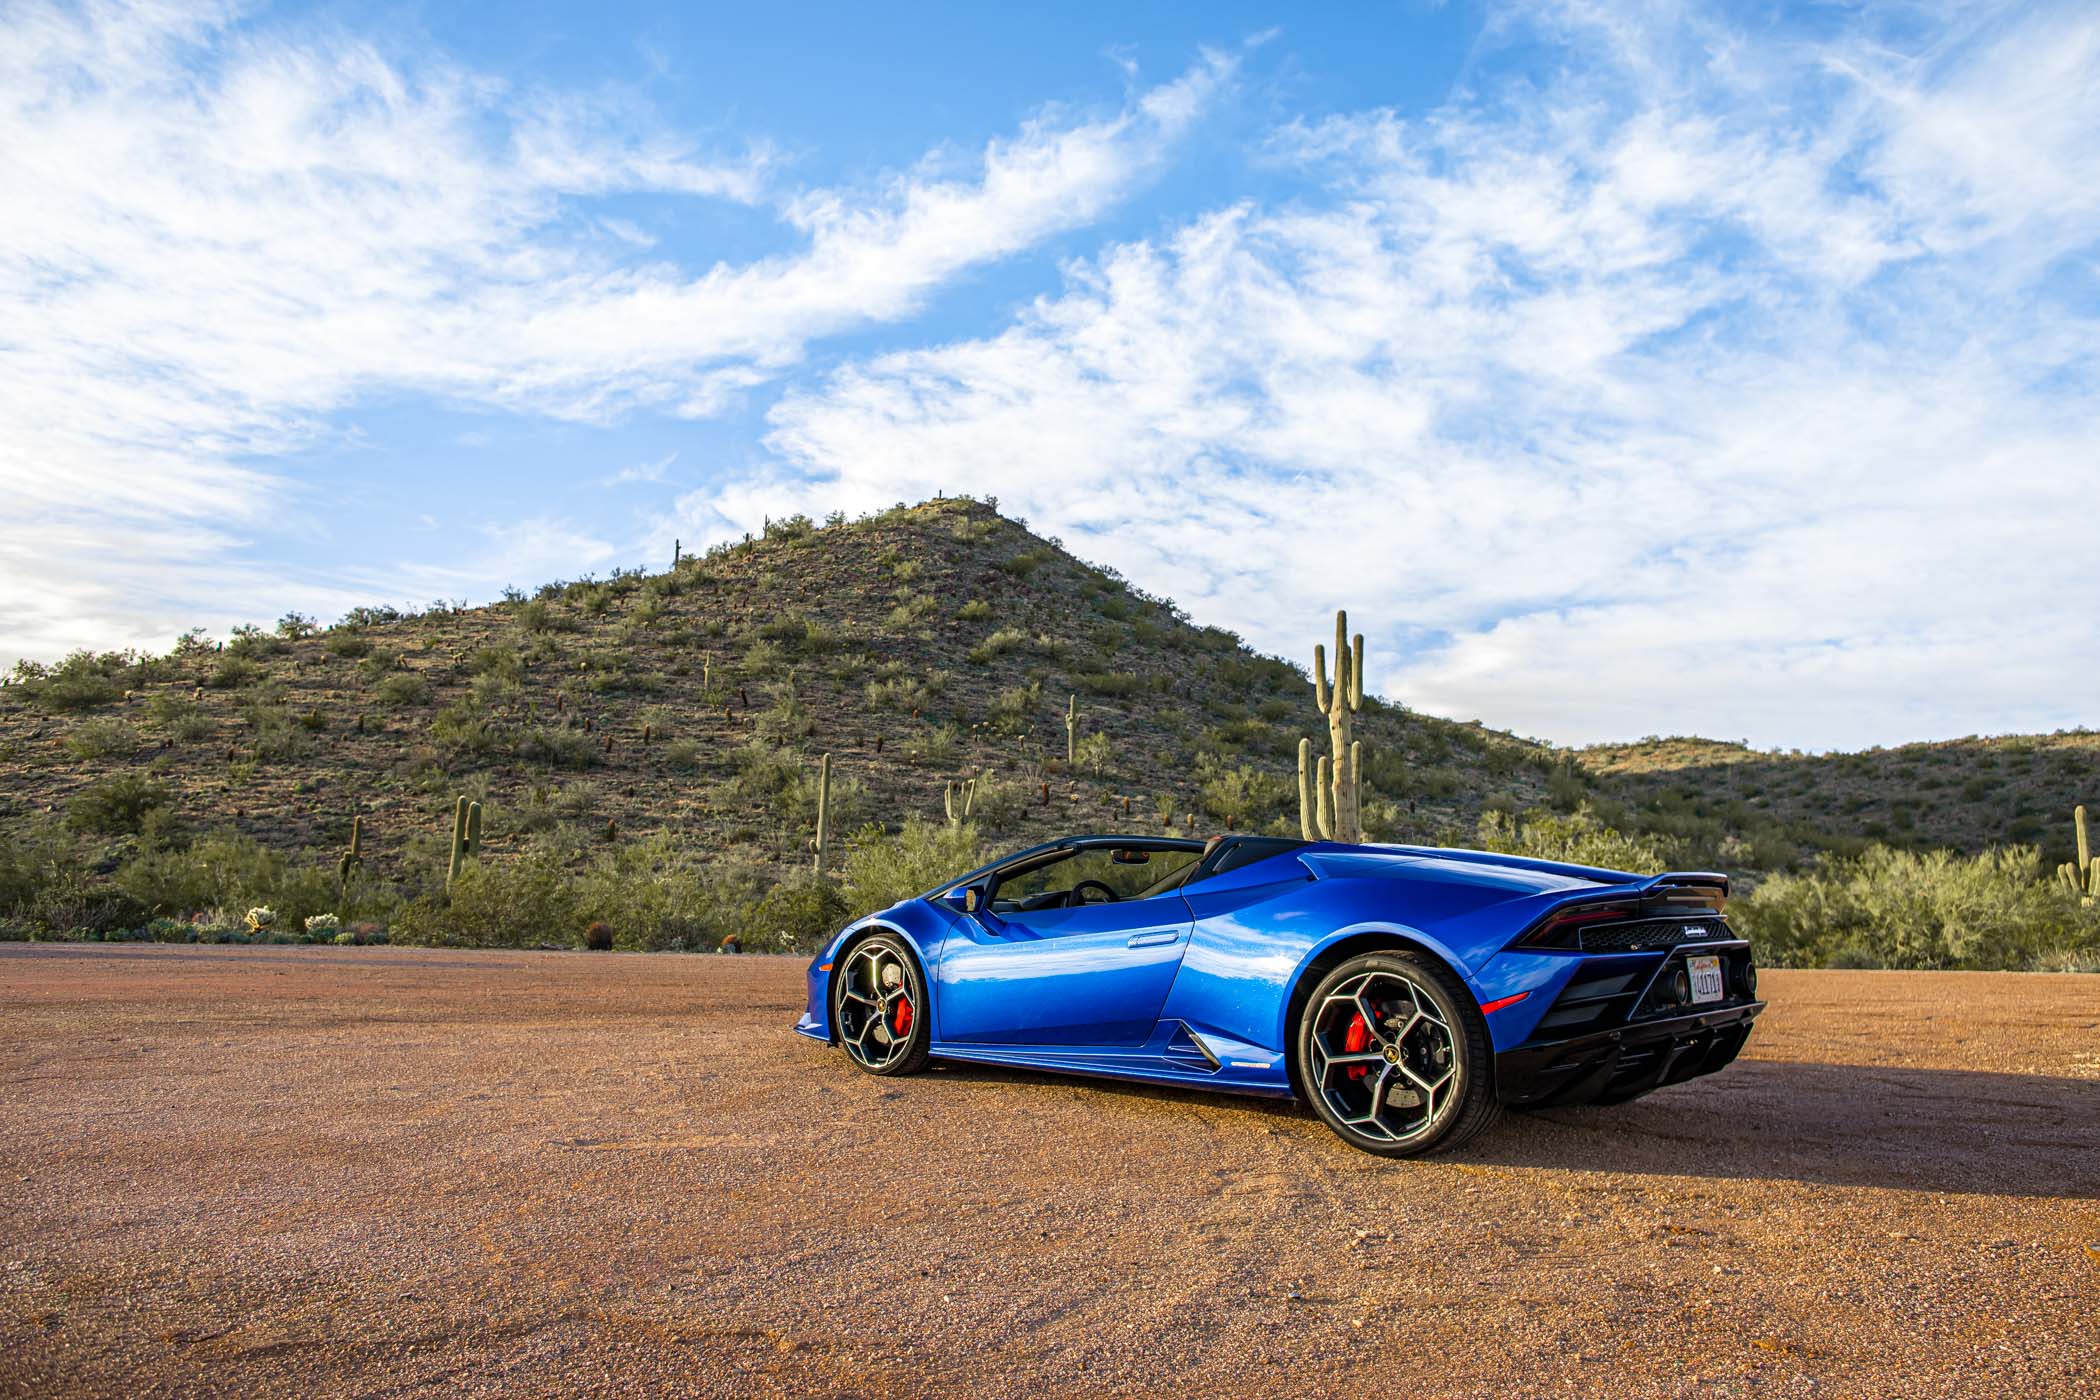 Lamborghini side view with desert mountain